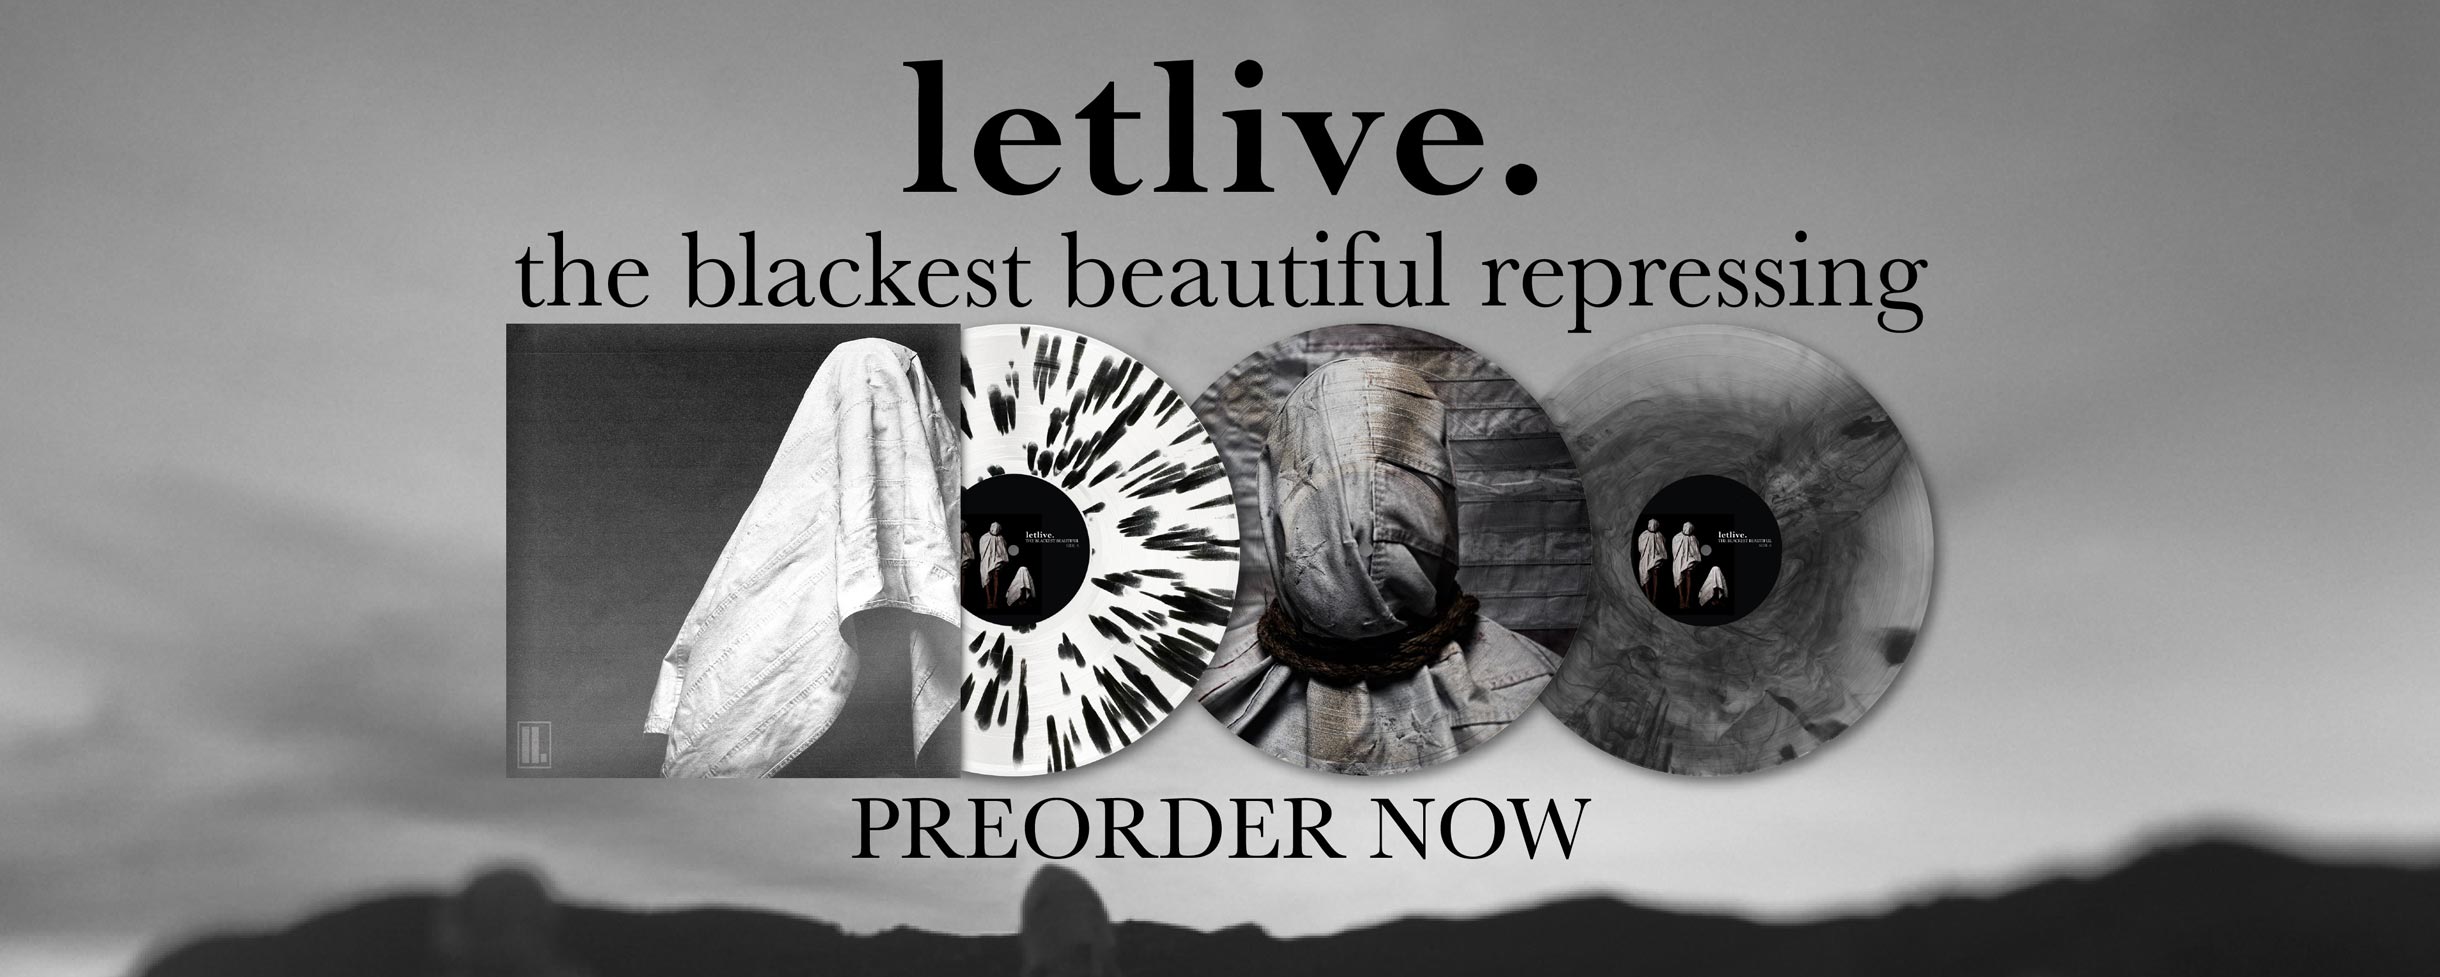 letlive - the blackest beautiful